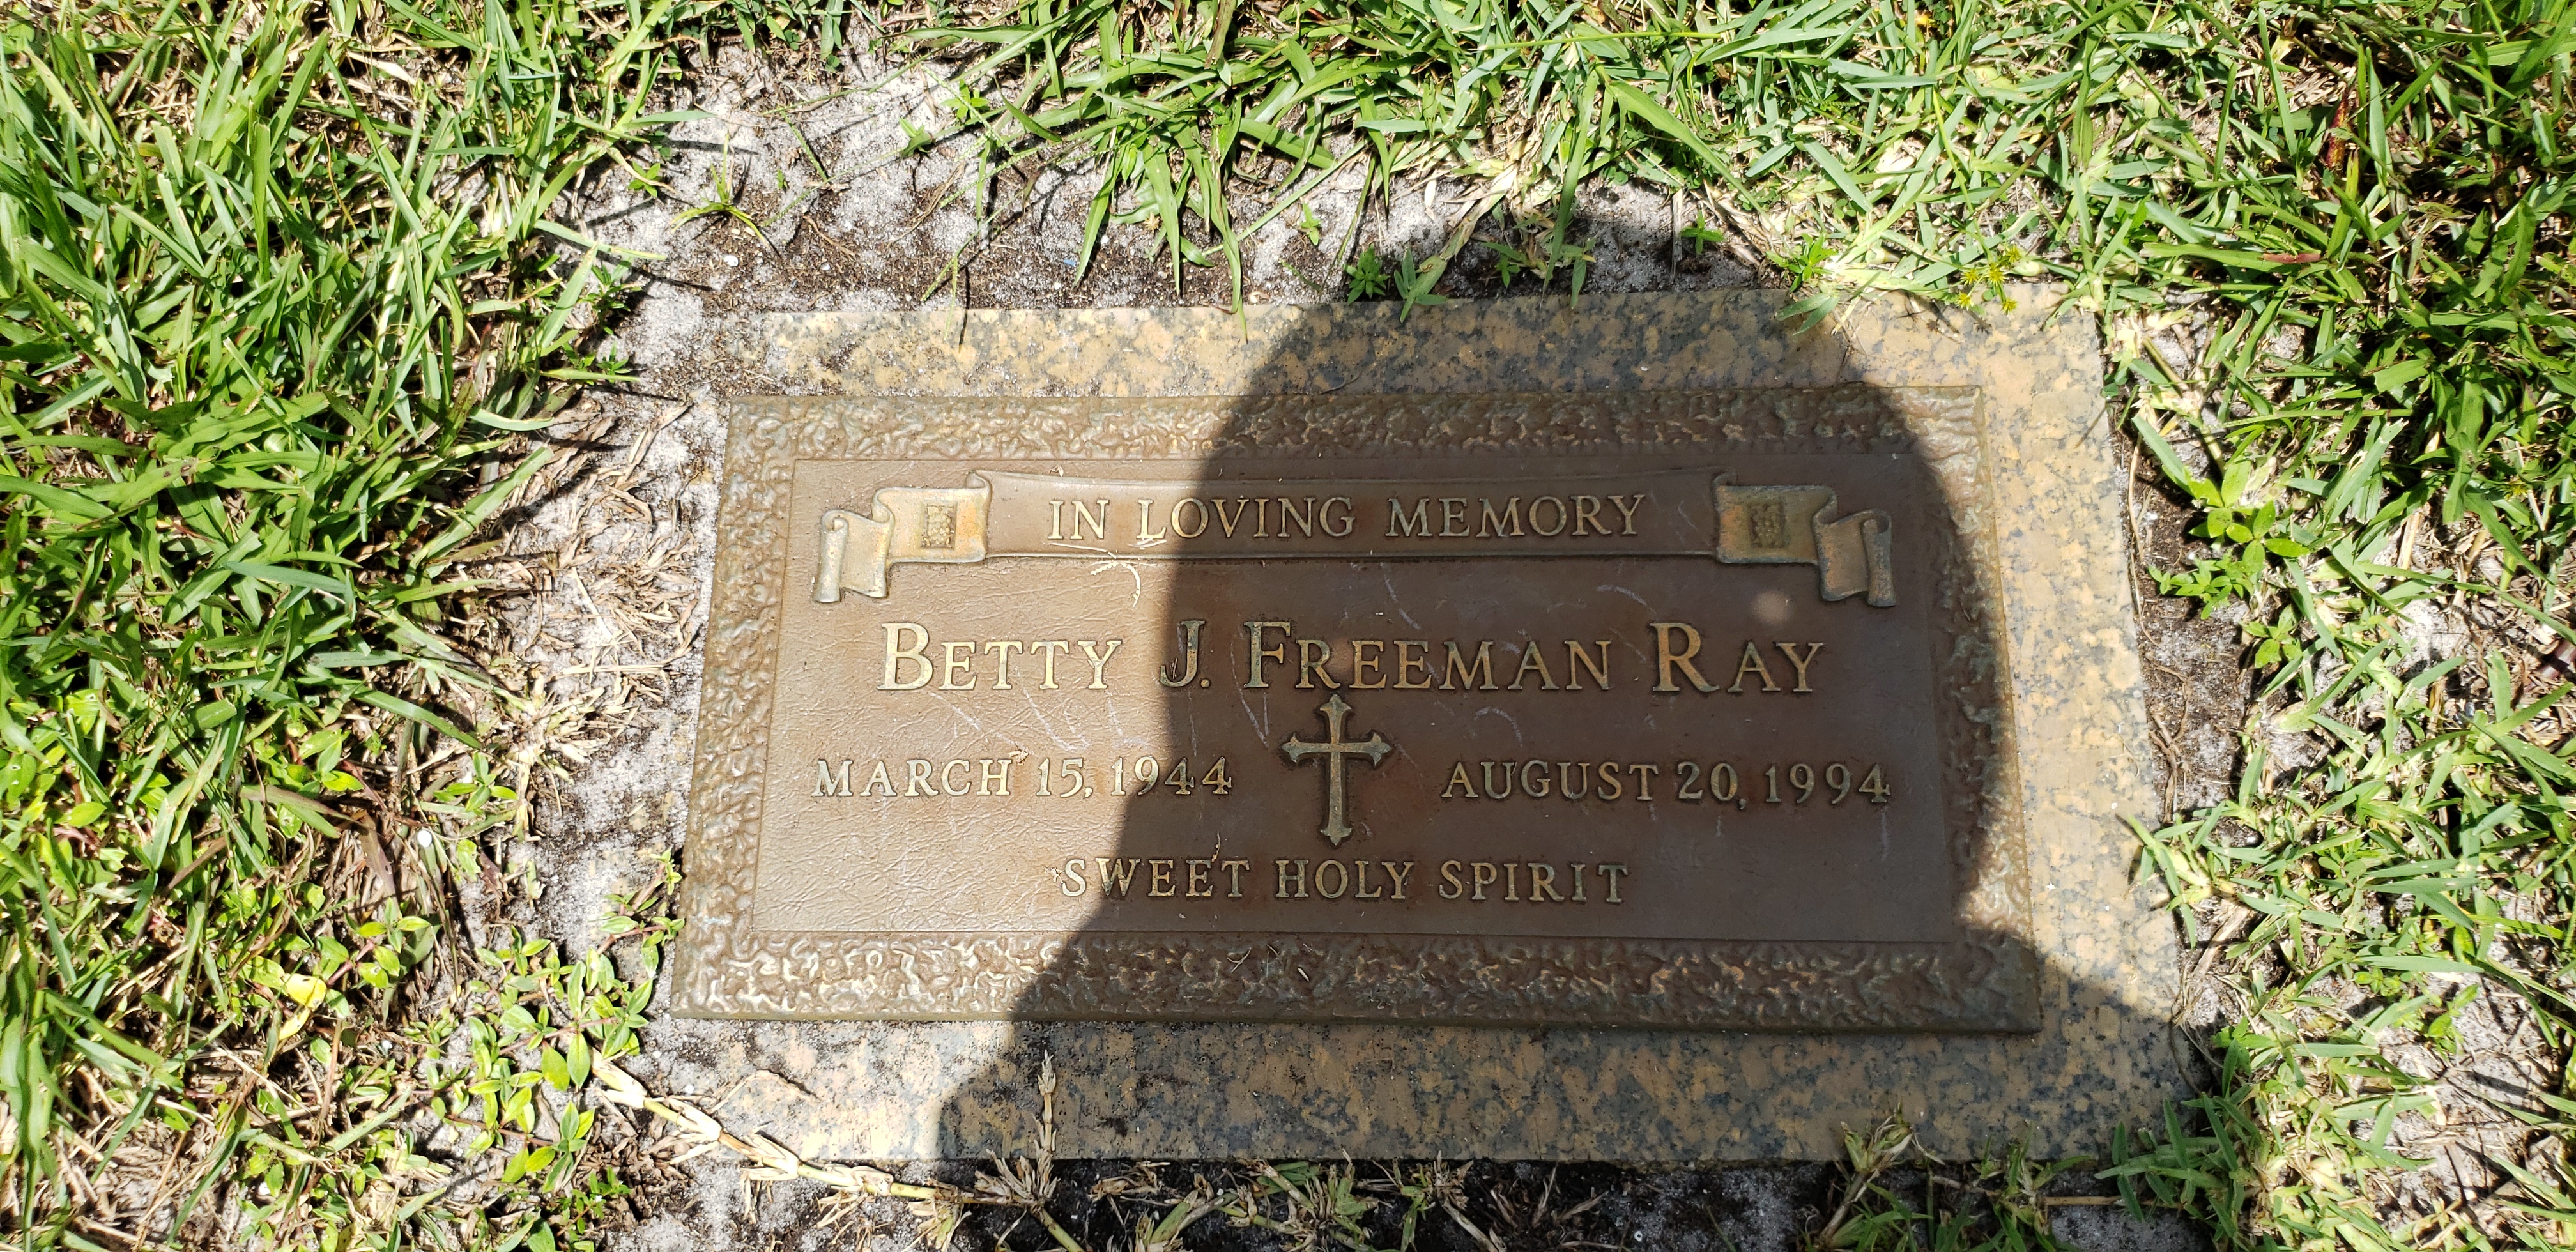 Betty J Freeman Ray